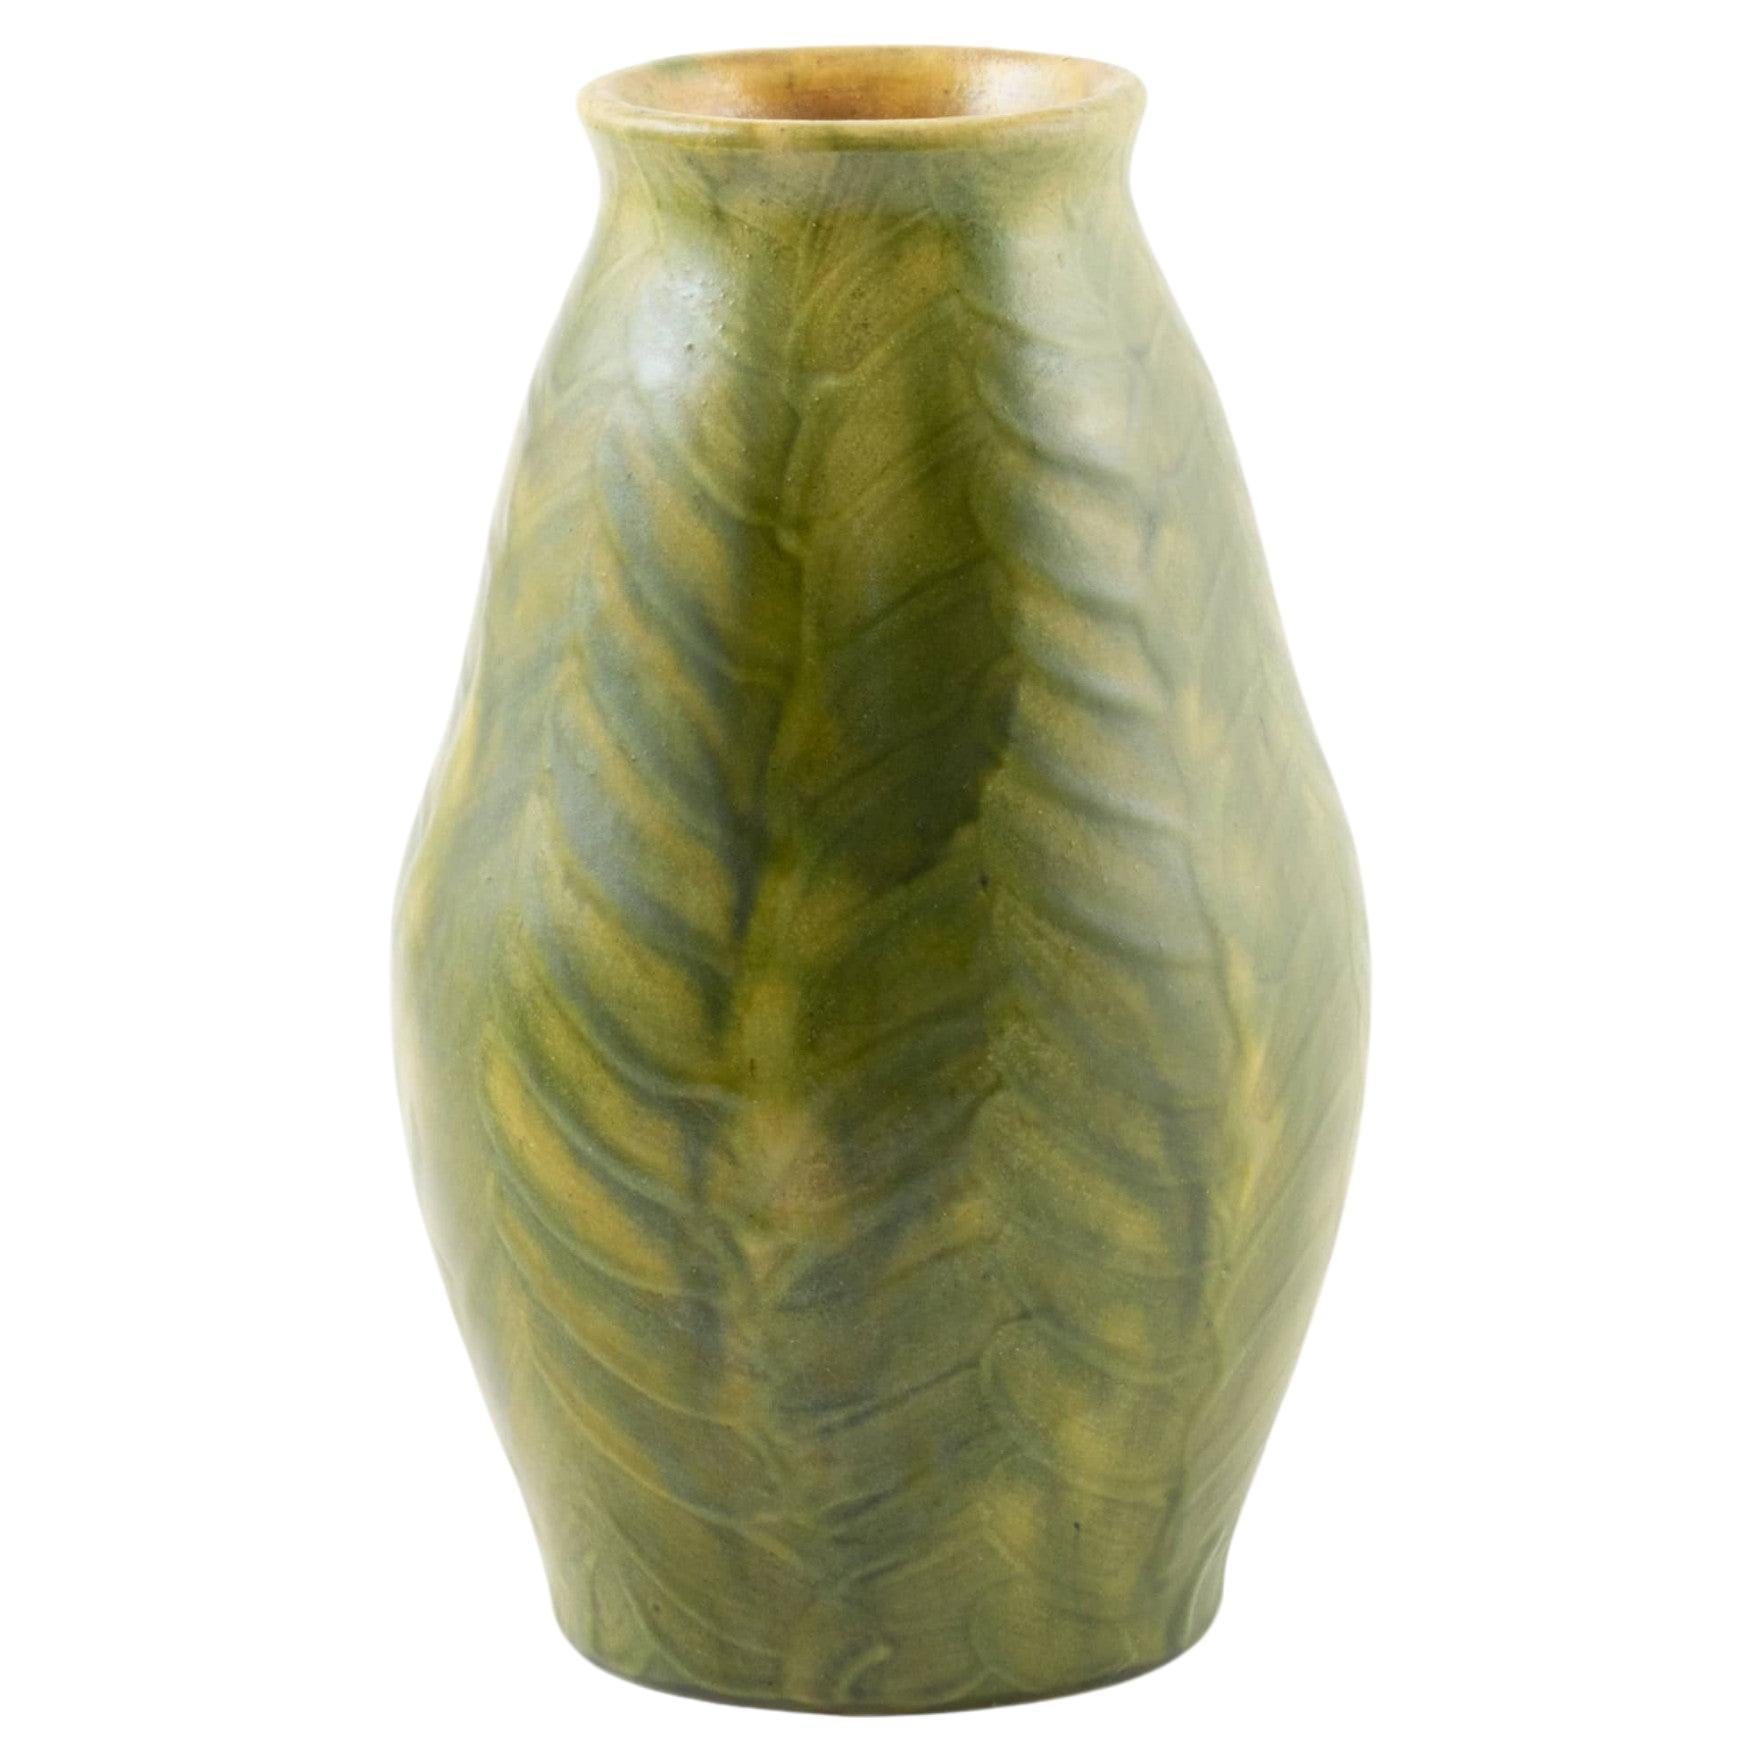 Kähler Vase Green Glazed with Leaves